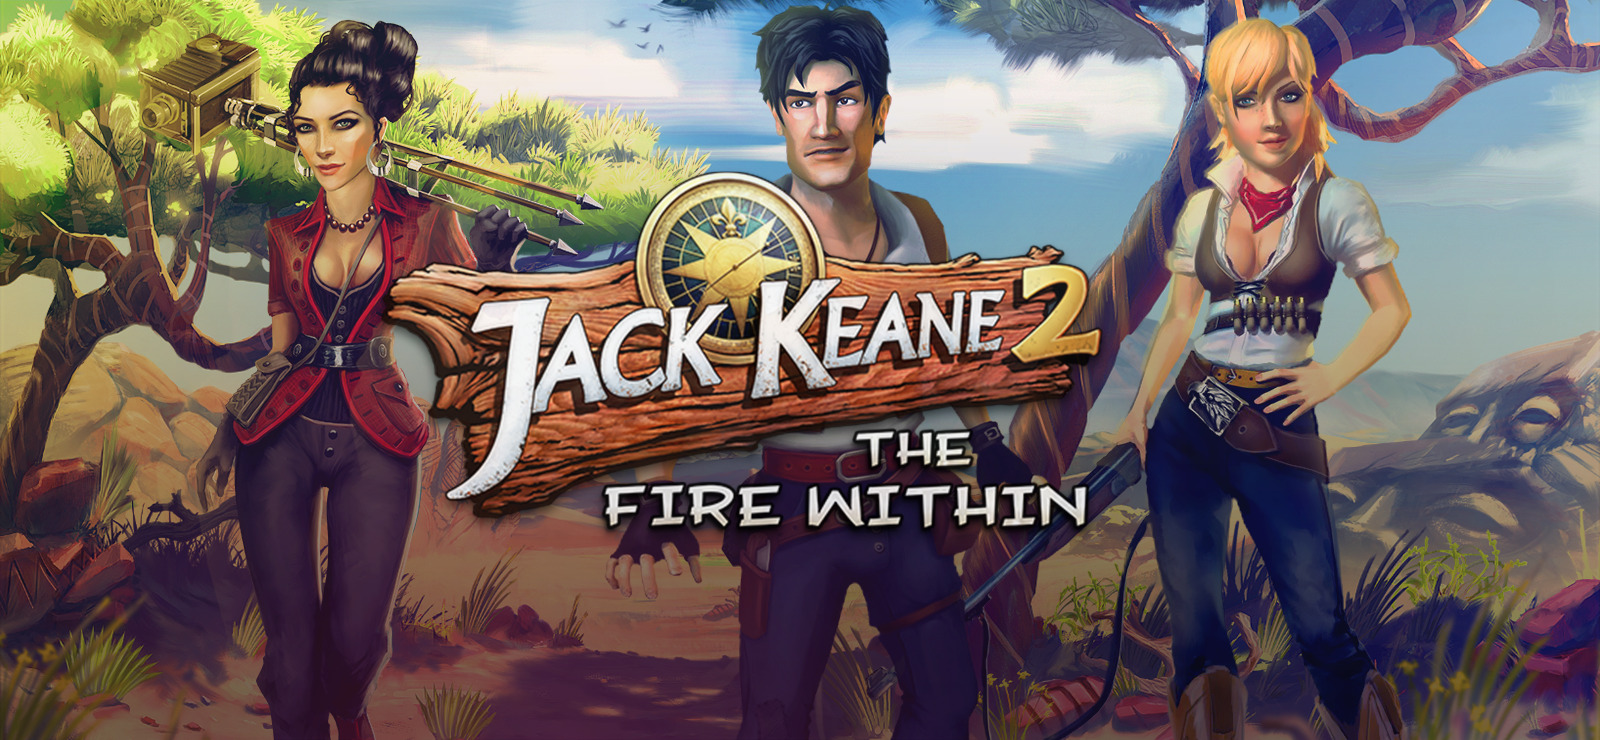 Game jack 2. Jack Keane 2: the Fire within. Джек Кин. Fire within. Джак Кеане игра.